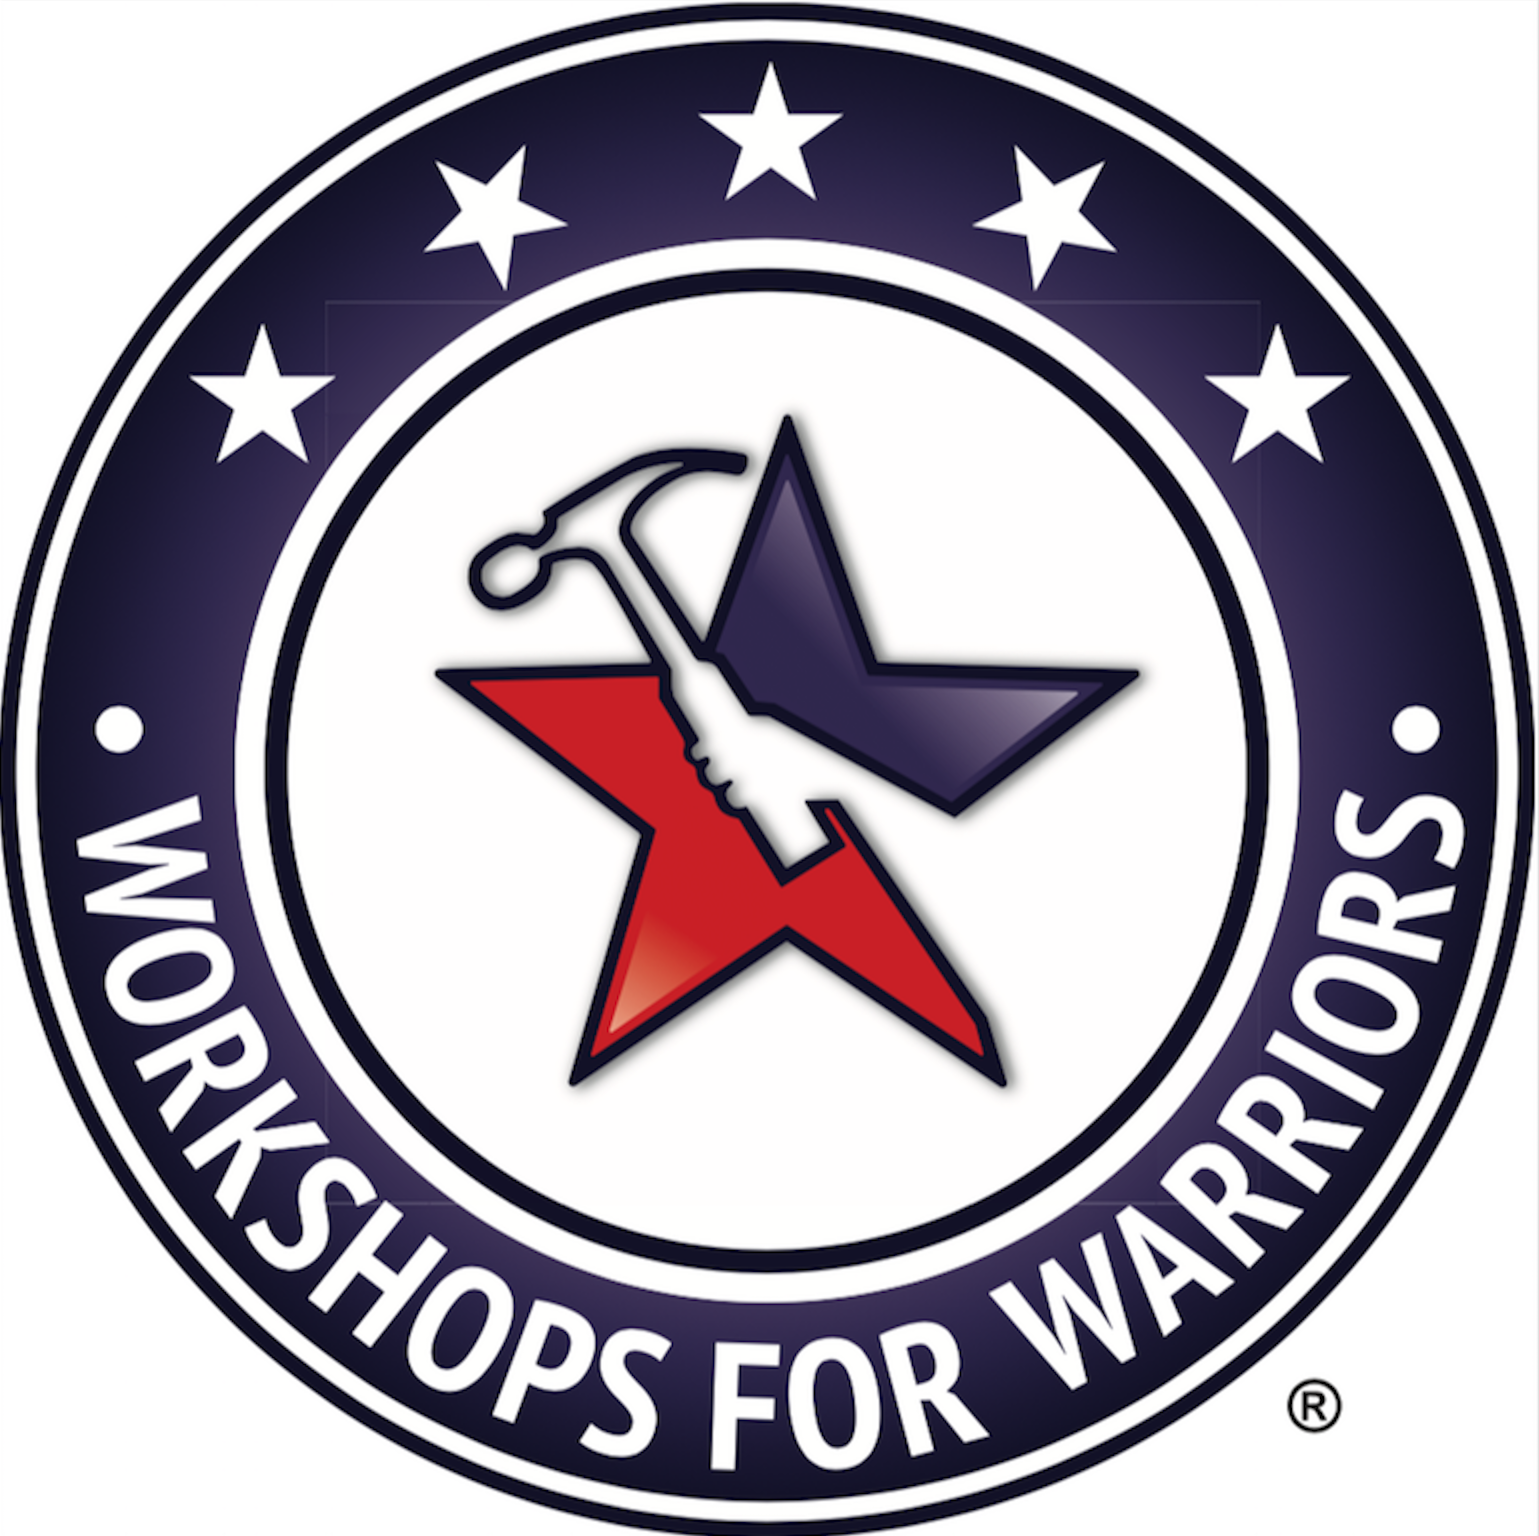 Workshops for Warriors